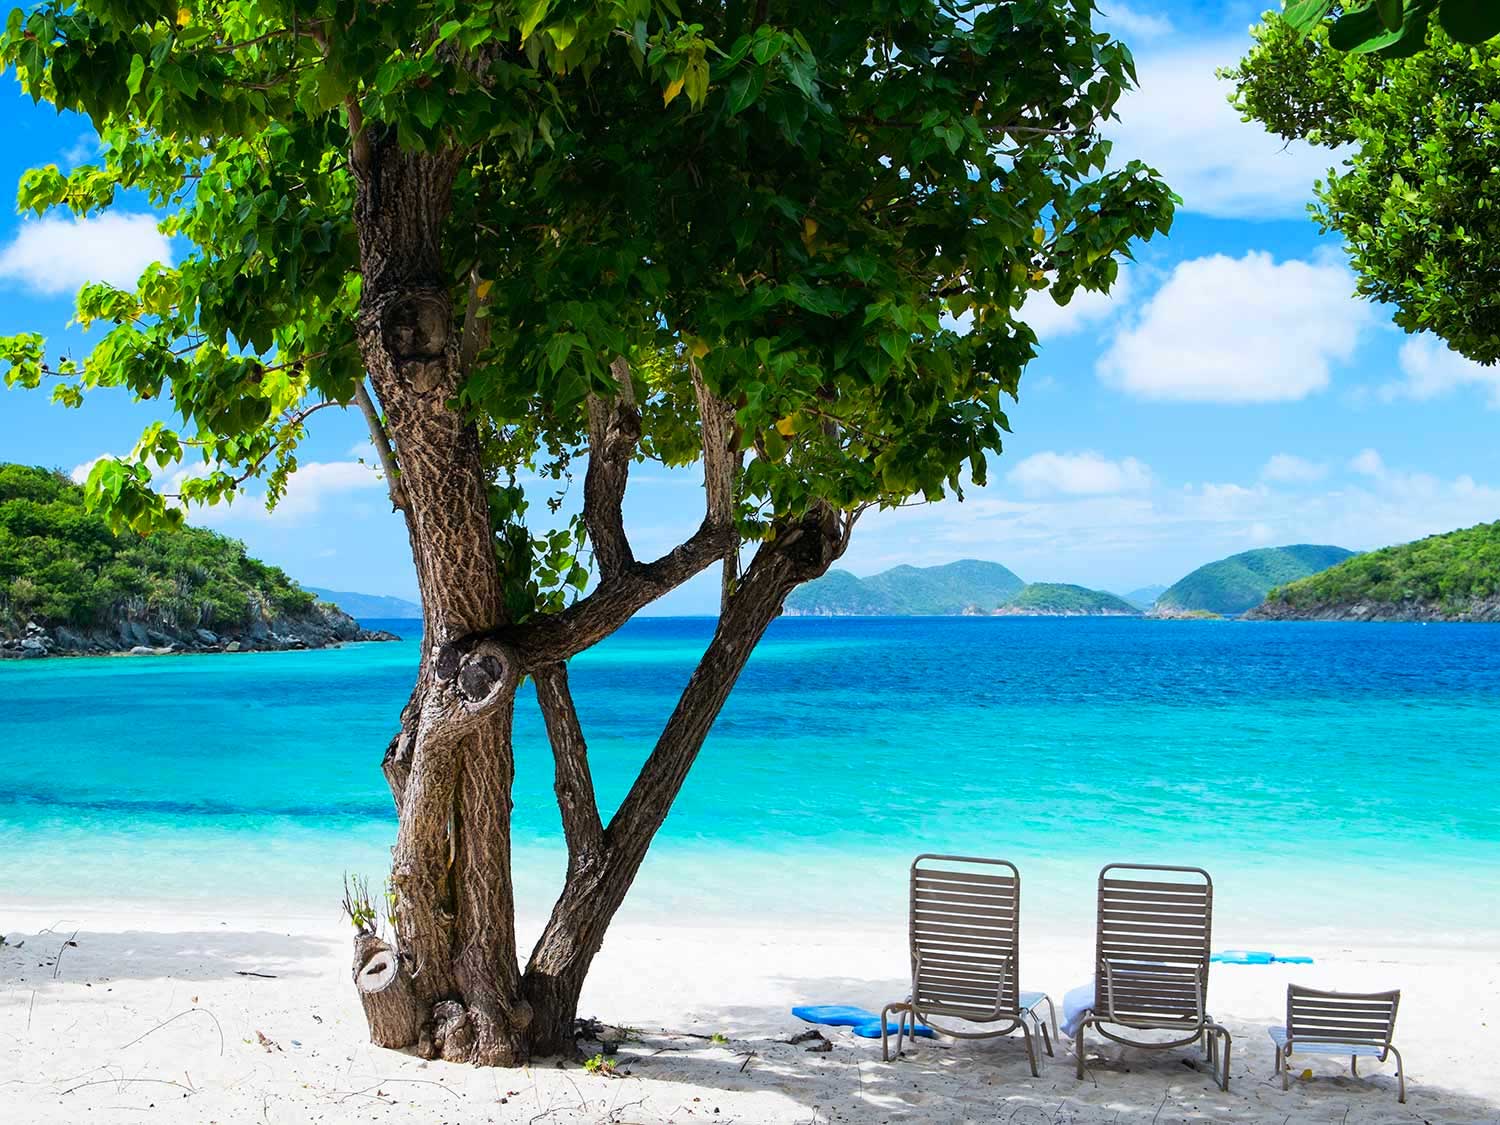 Clear ocean and beach in U.S Virgin Islands